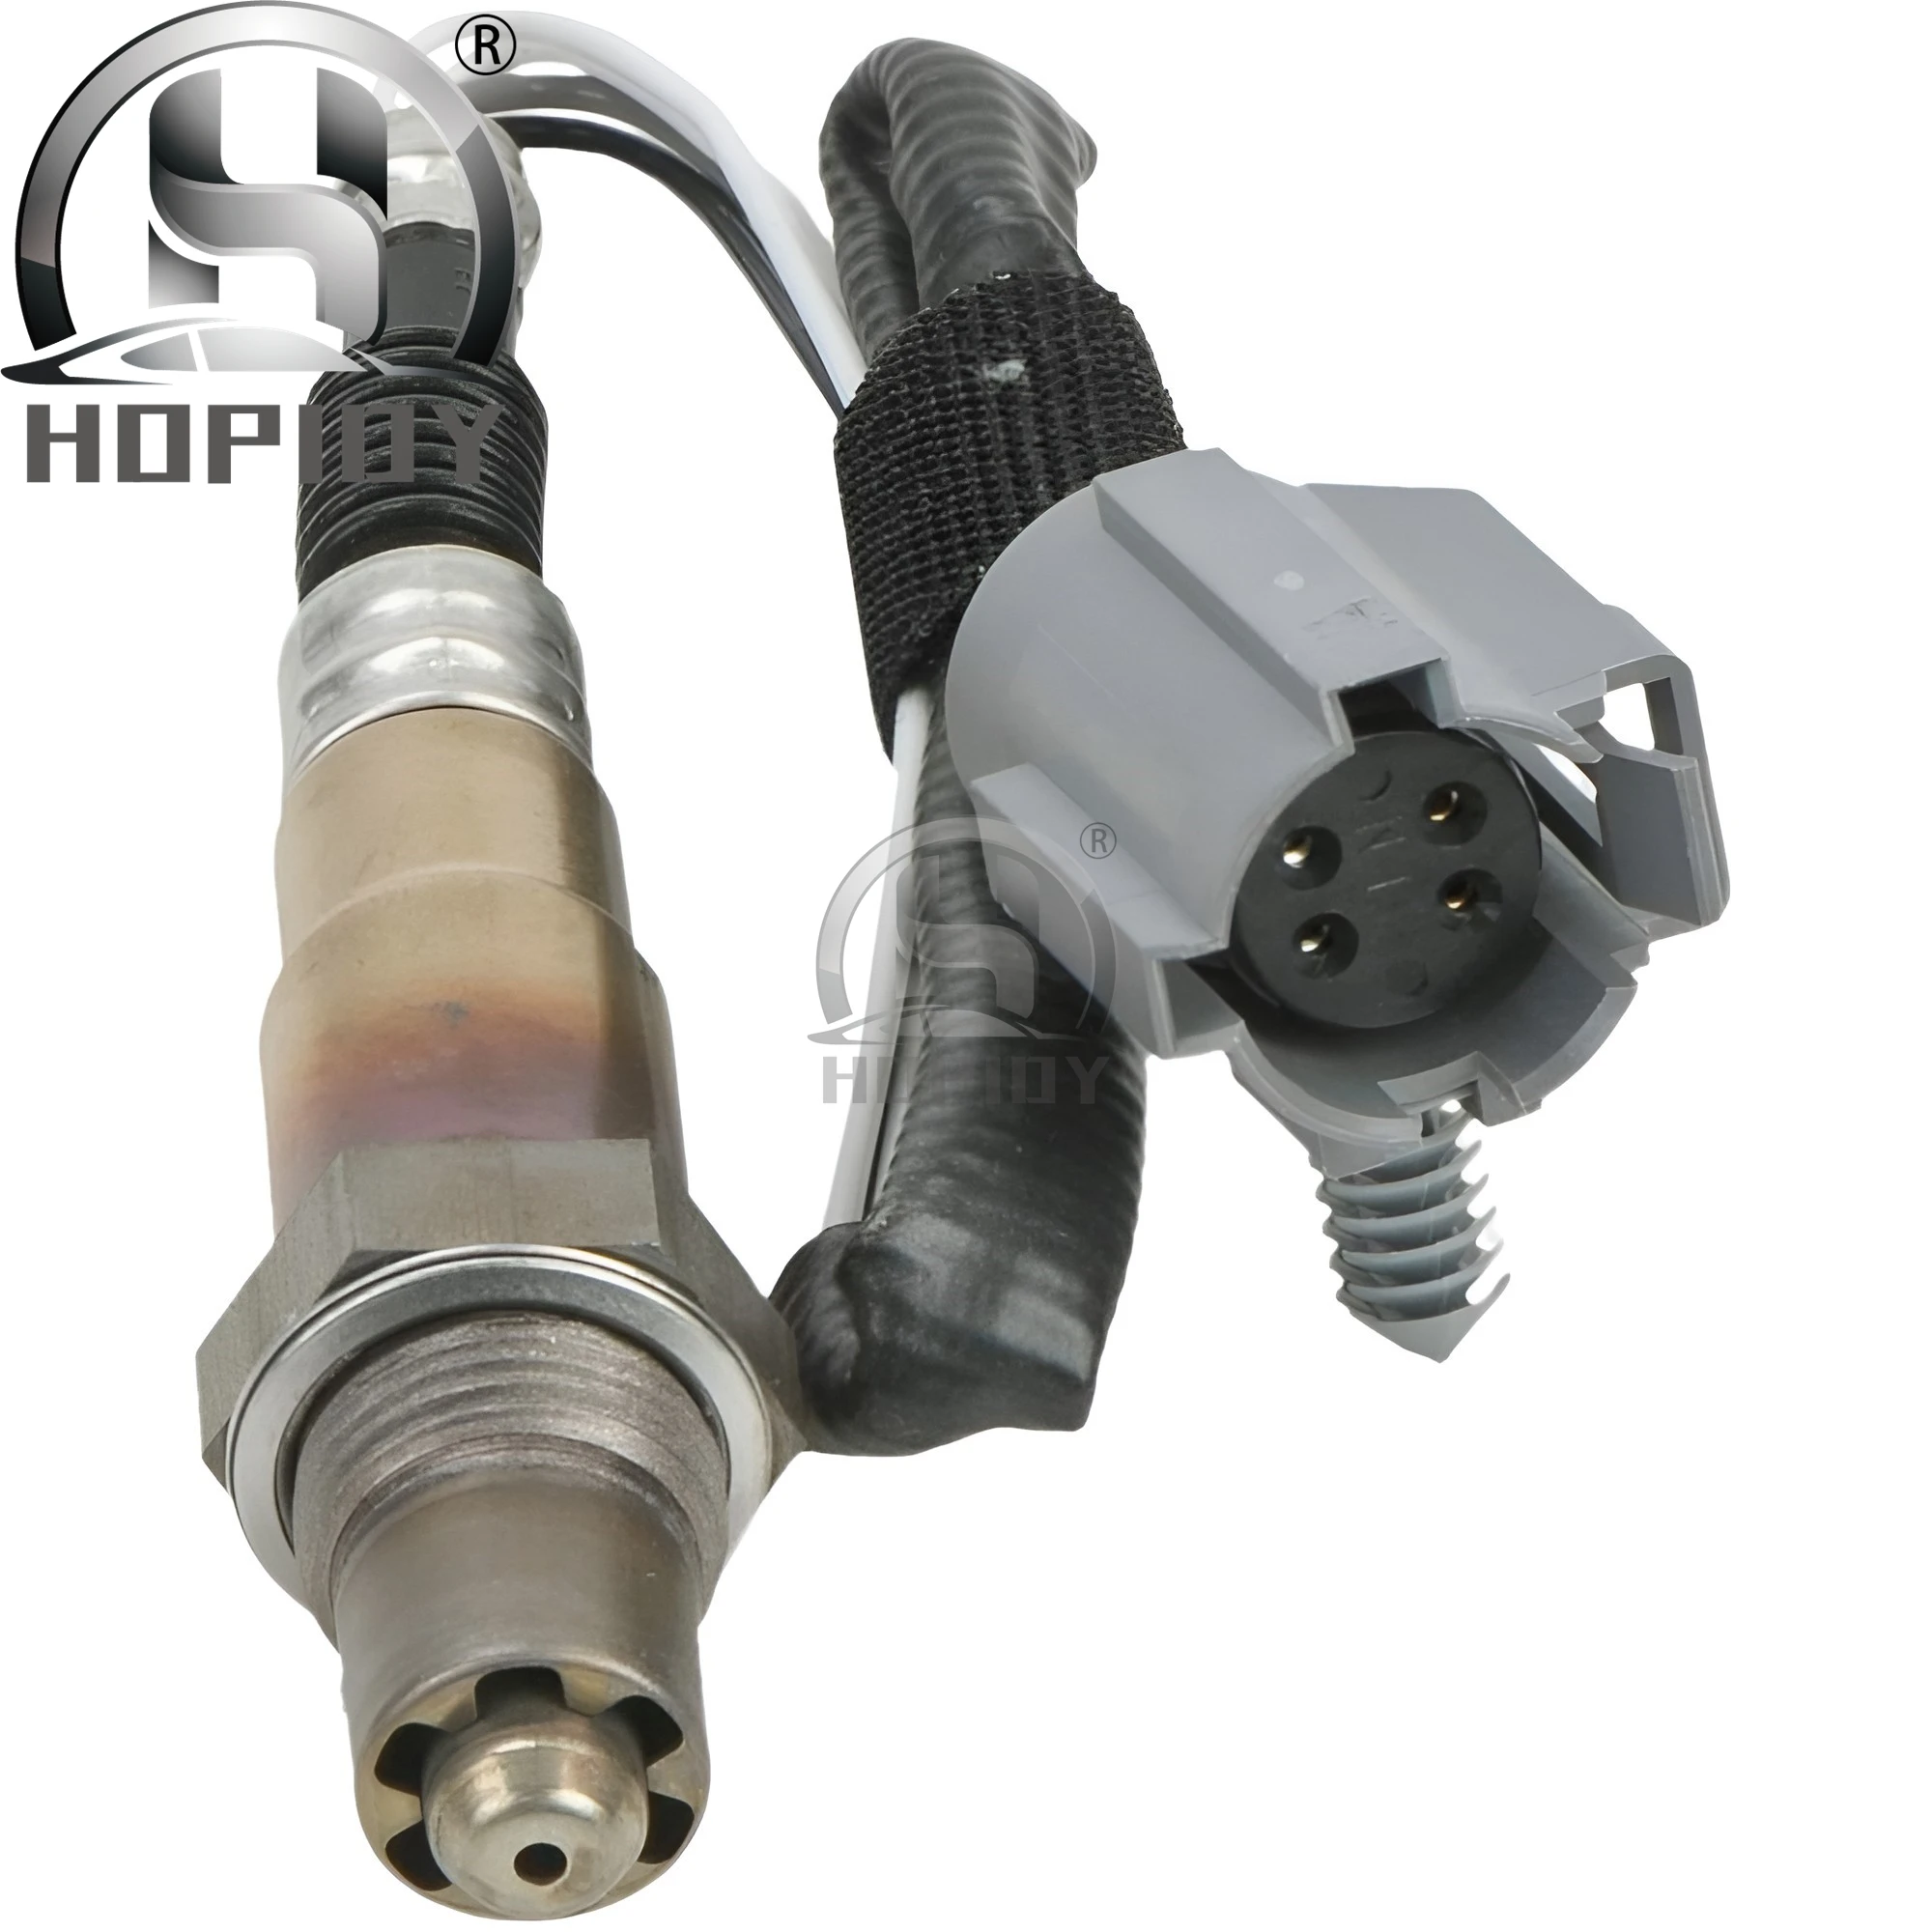 

H67 For Replacement Bosch 13544/13559/13610/13642/50/64/72/86/187/95 Oxygen Sensors